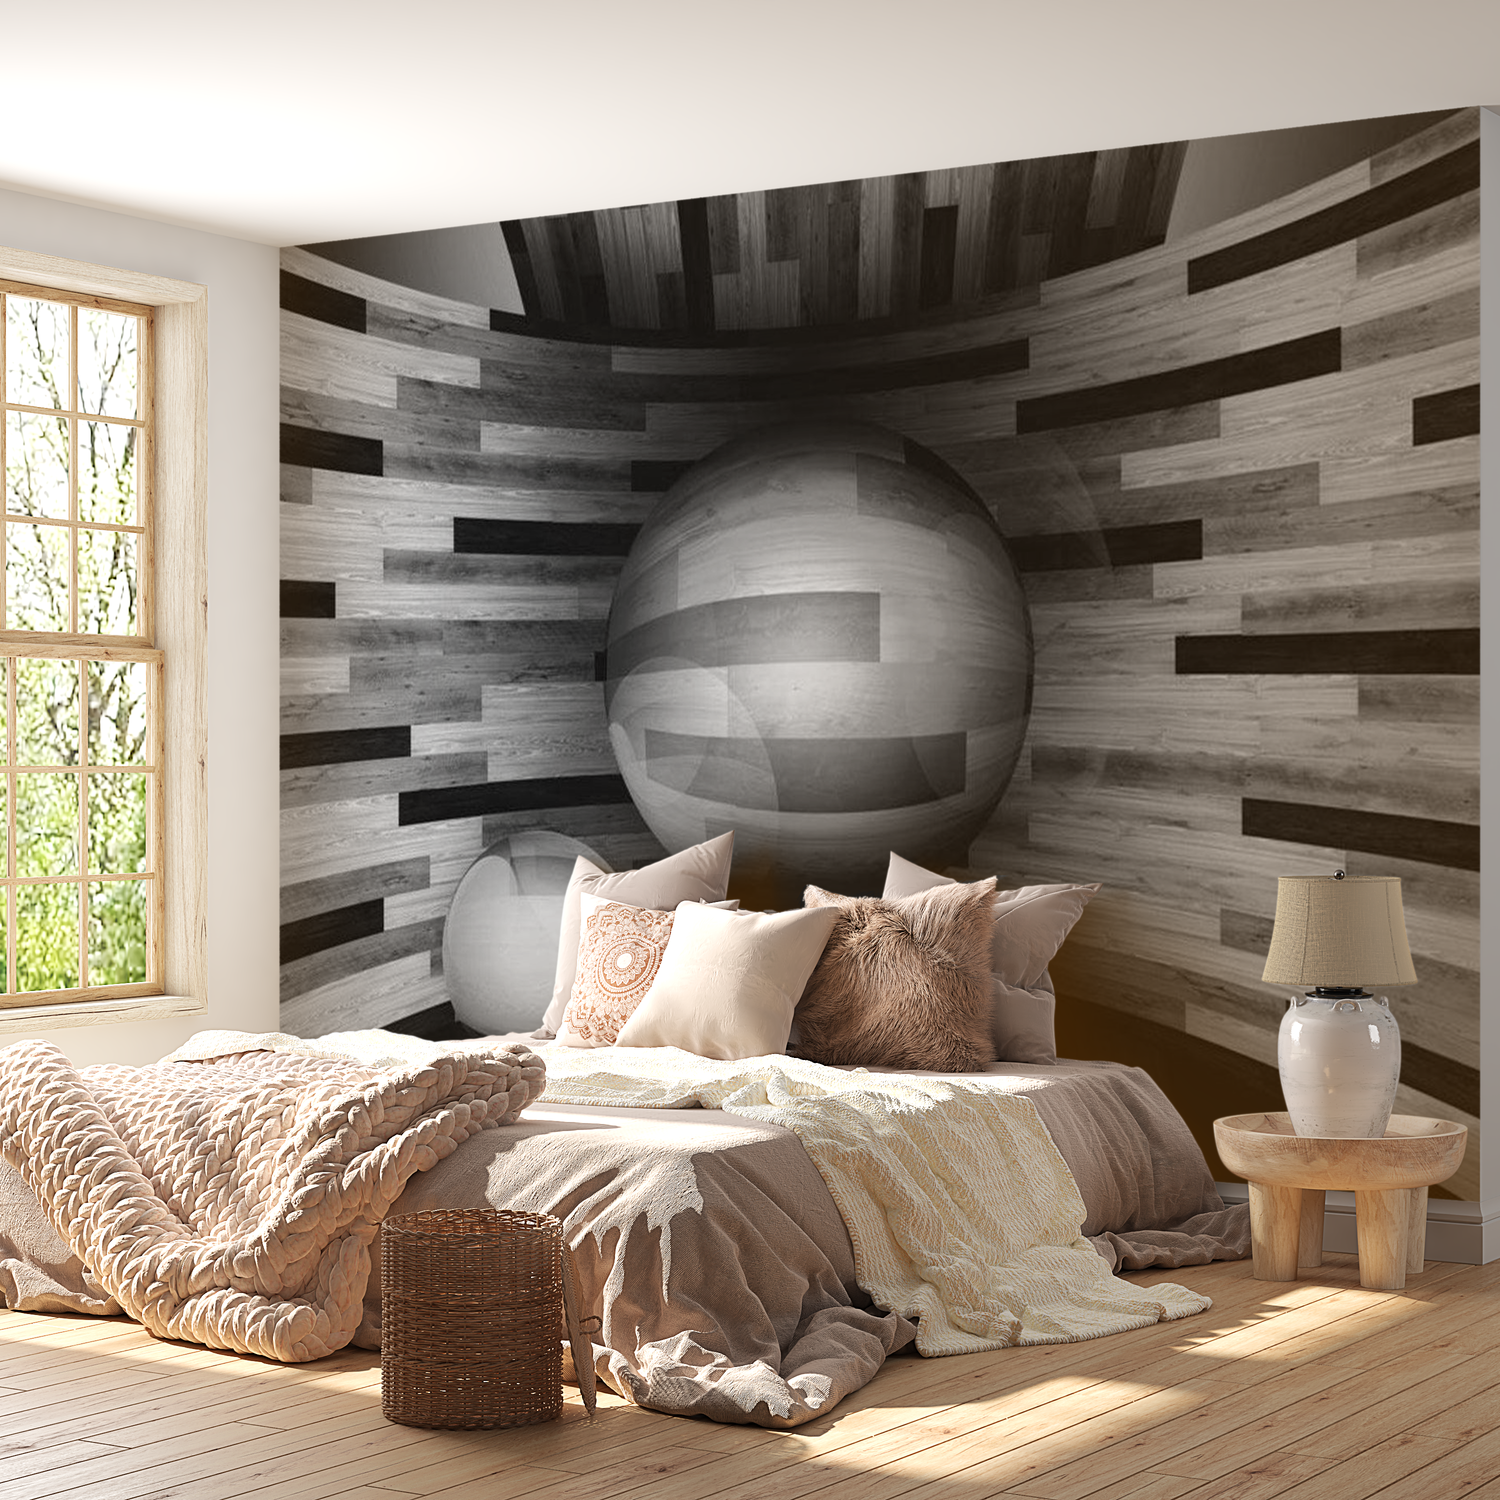 3D Illusion Wallpaper Wall Mural - Gray Sphere 39"Wx27"H